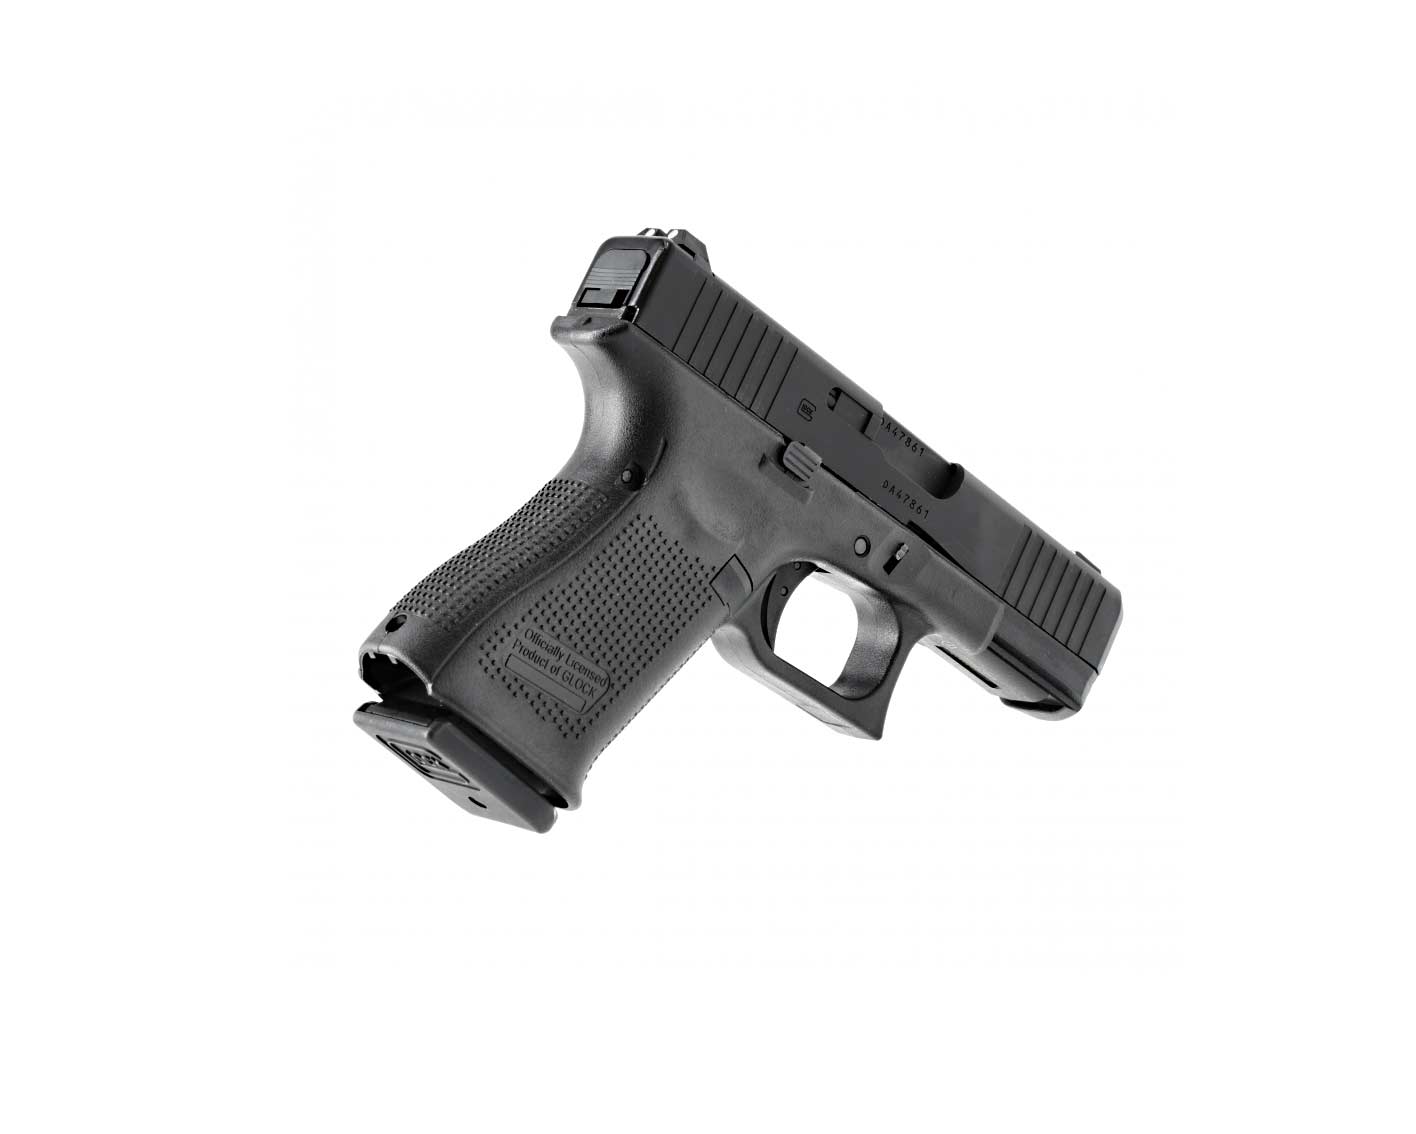 replika pistolet asg glock 19 gen 5 6 mm 9fa02c47b85249fcacf0f5e513ebb251 fc8a2878